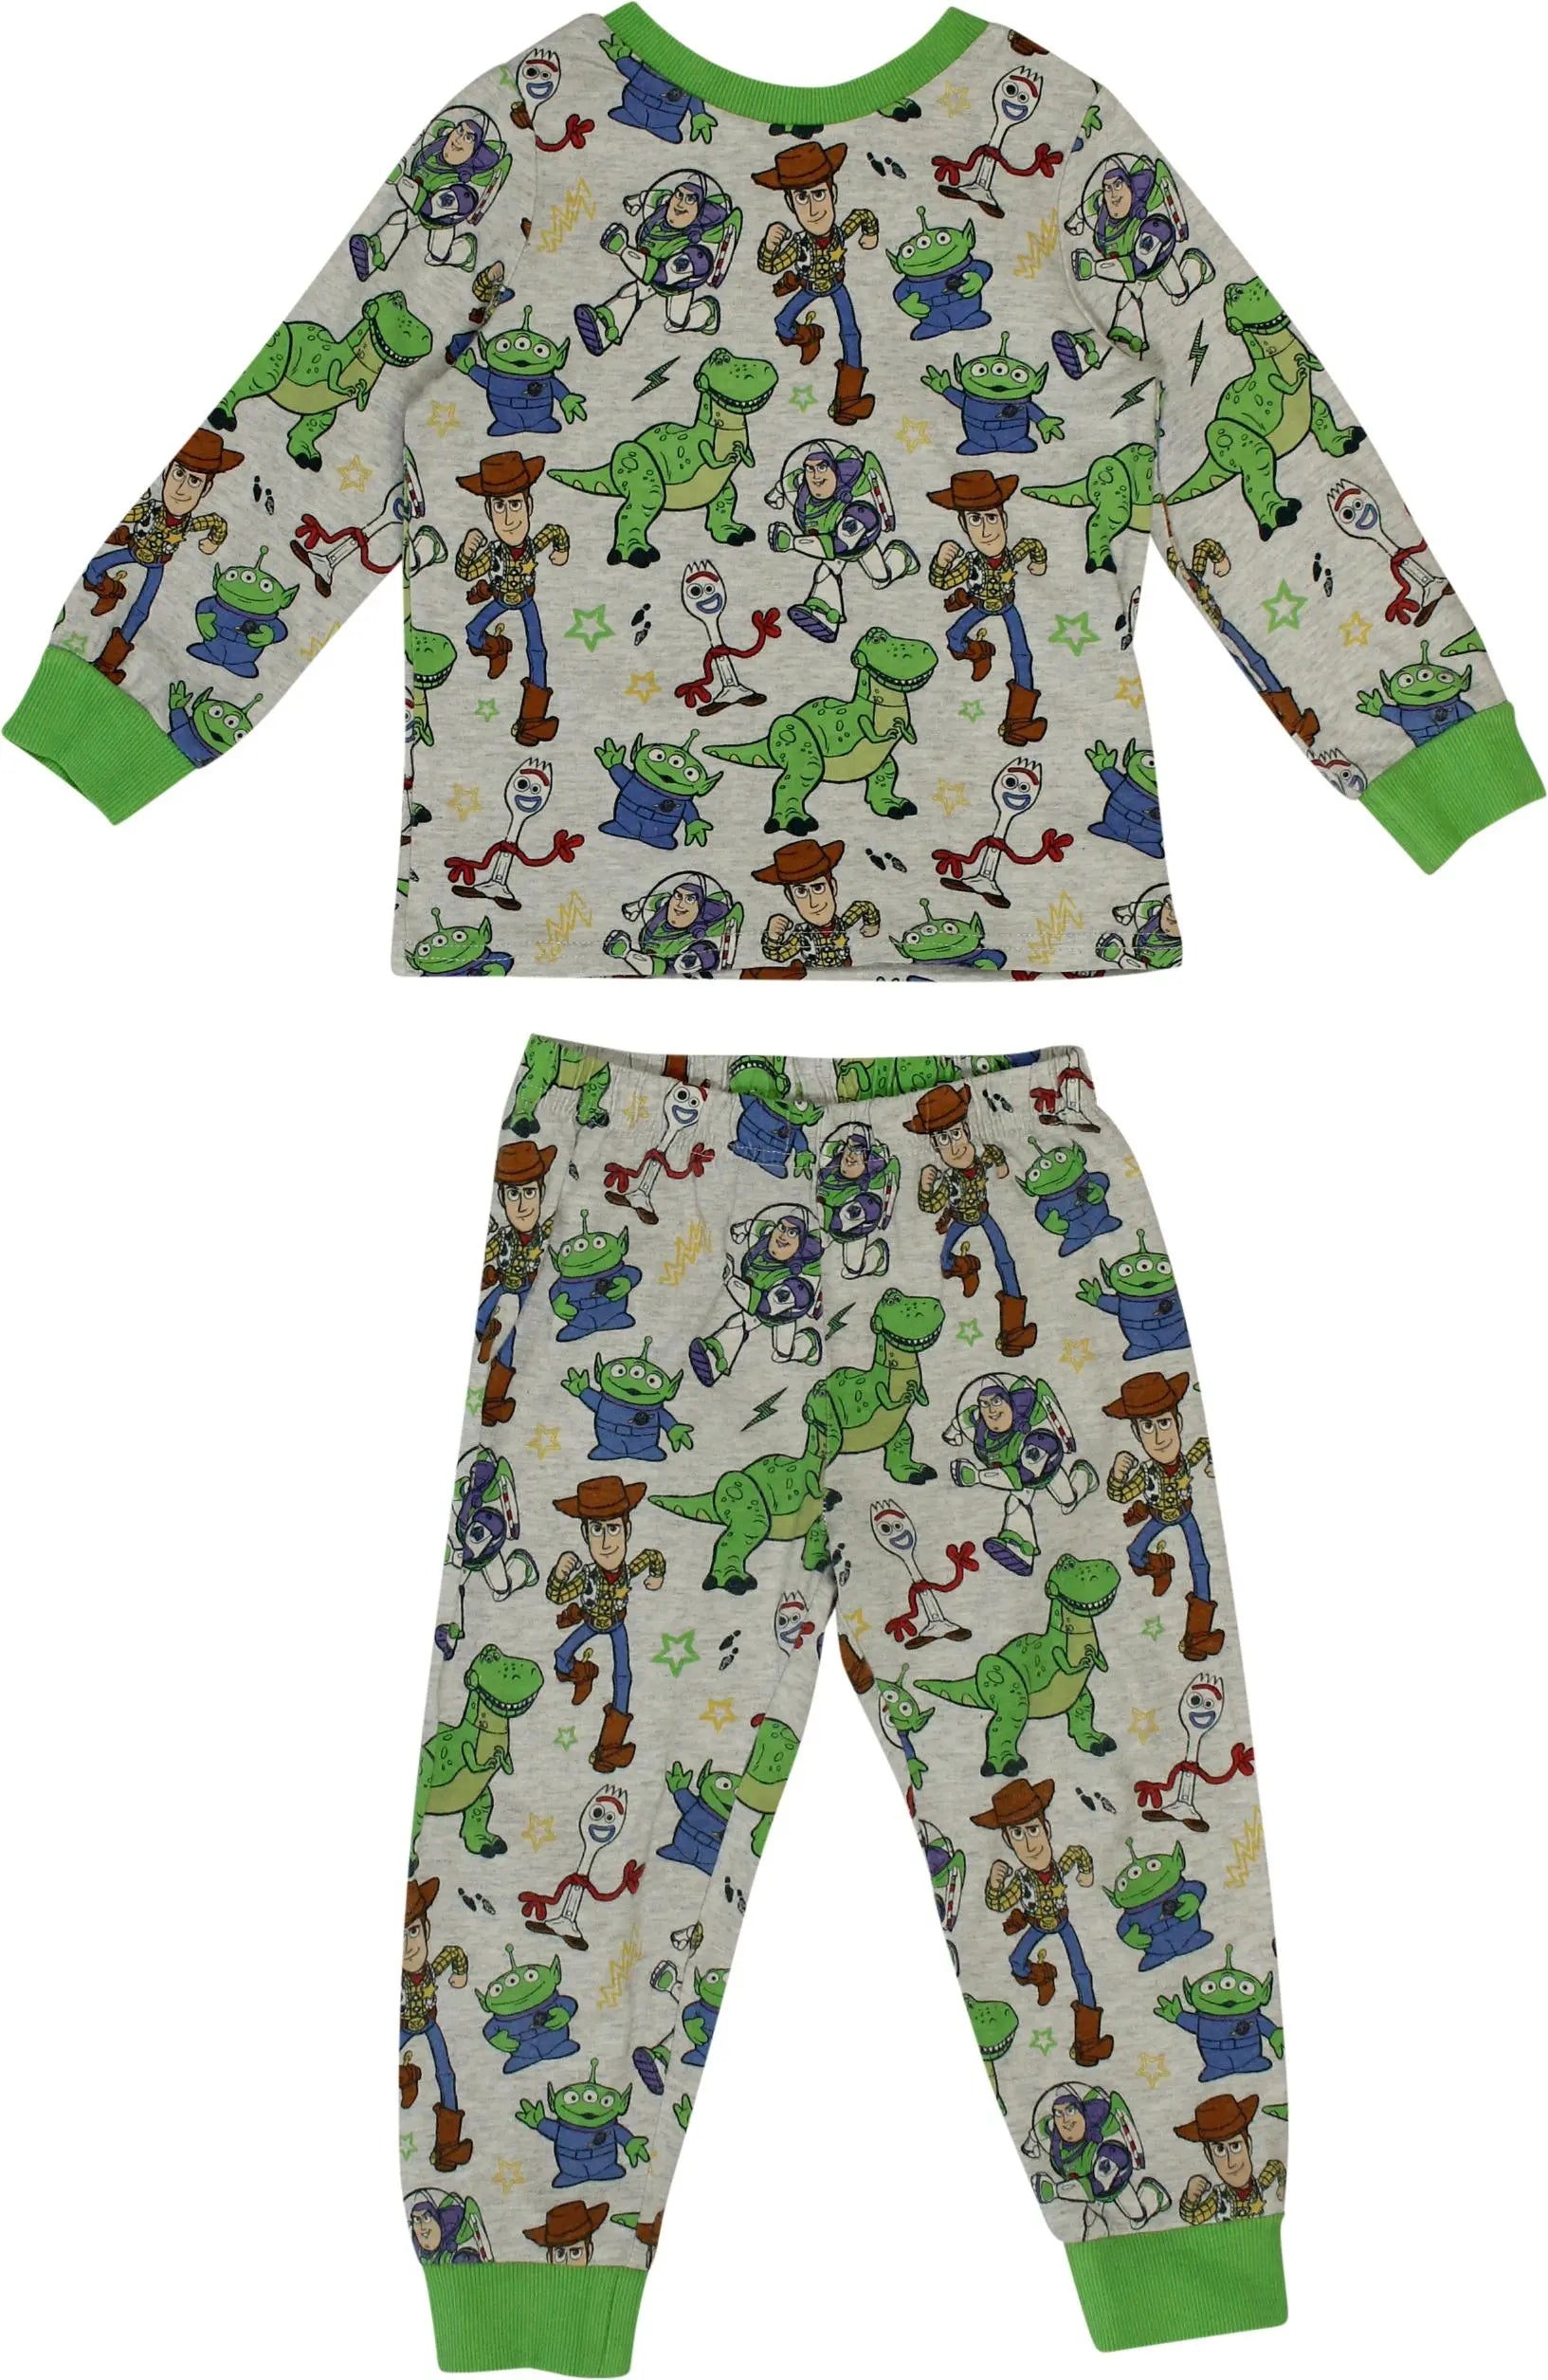 Disney - Pyjama Set- ThriftTale.com - Vintage and second handclothing